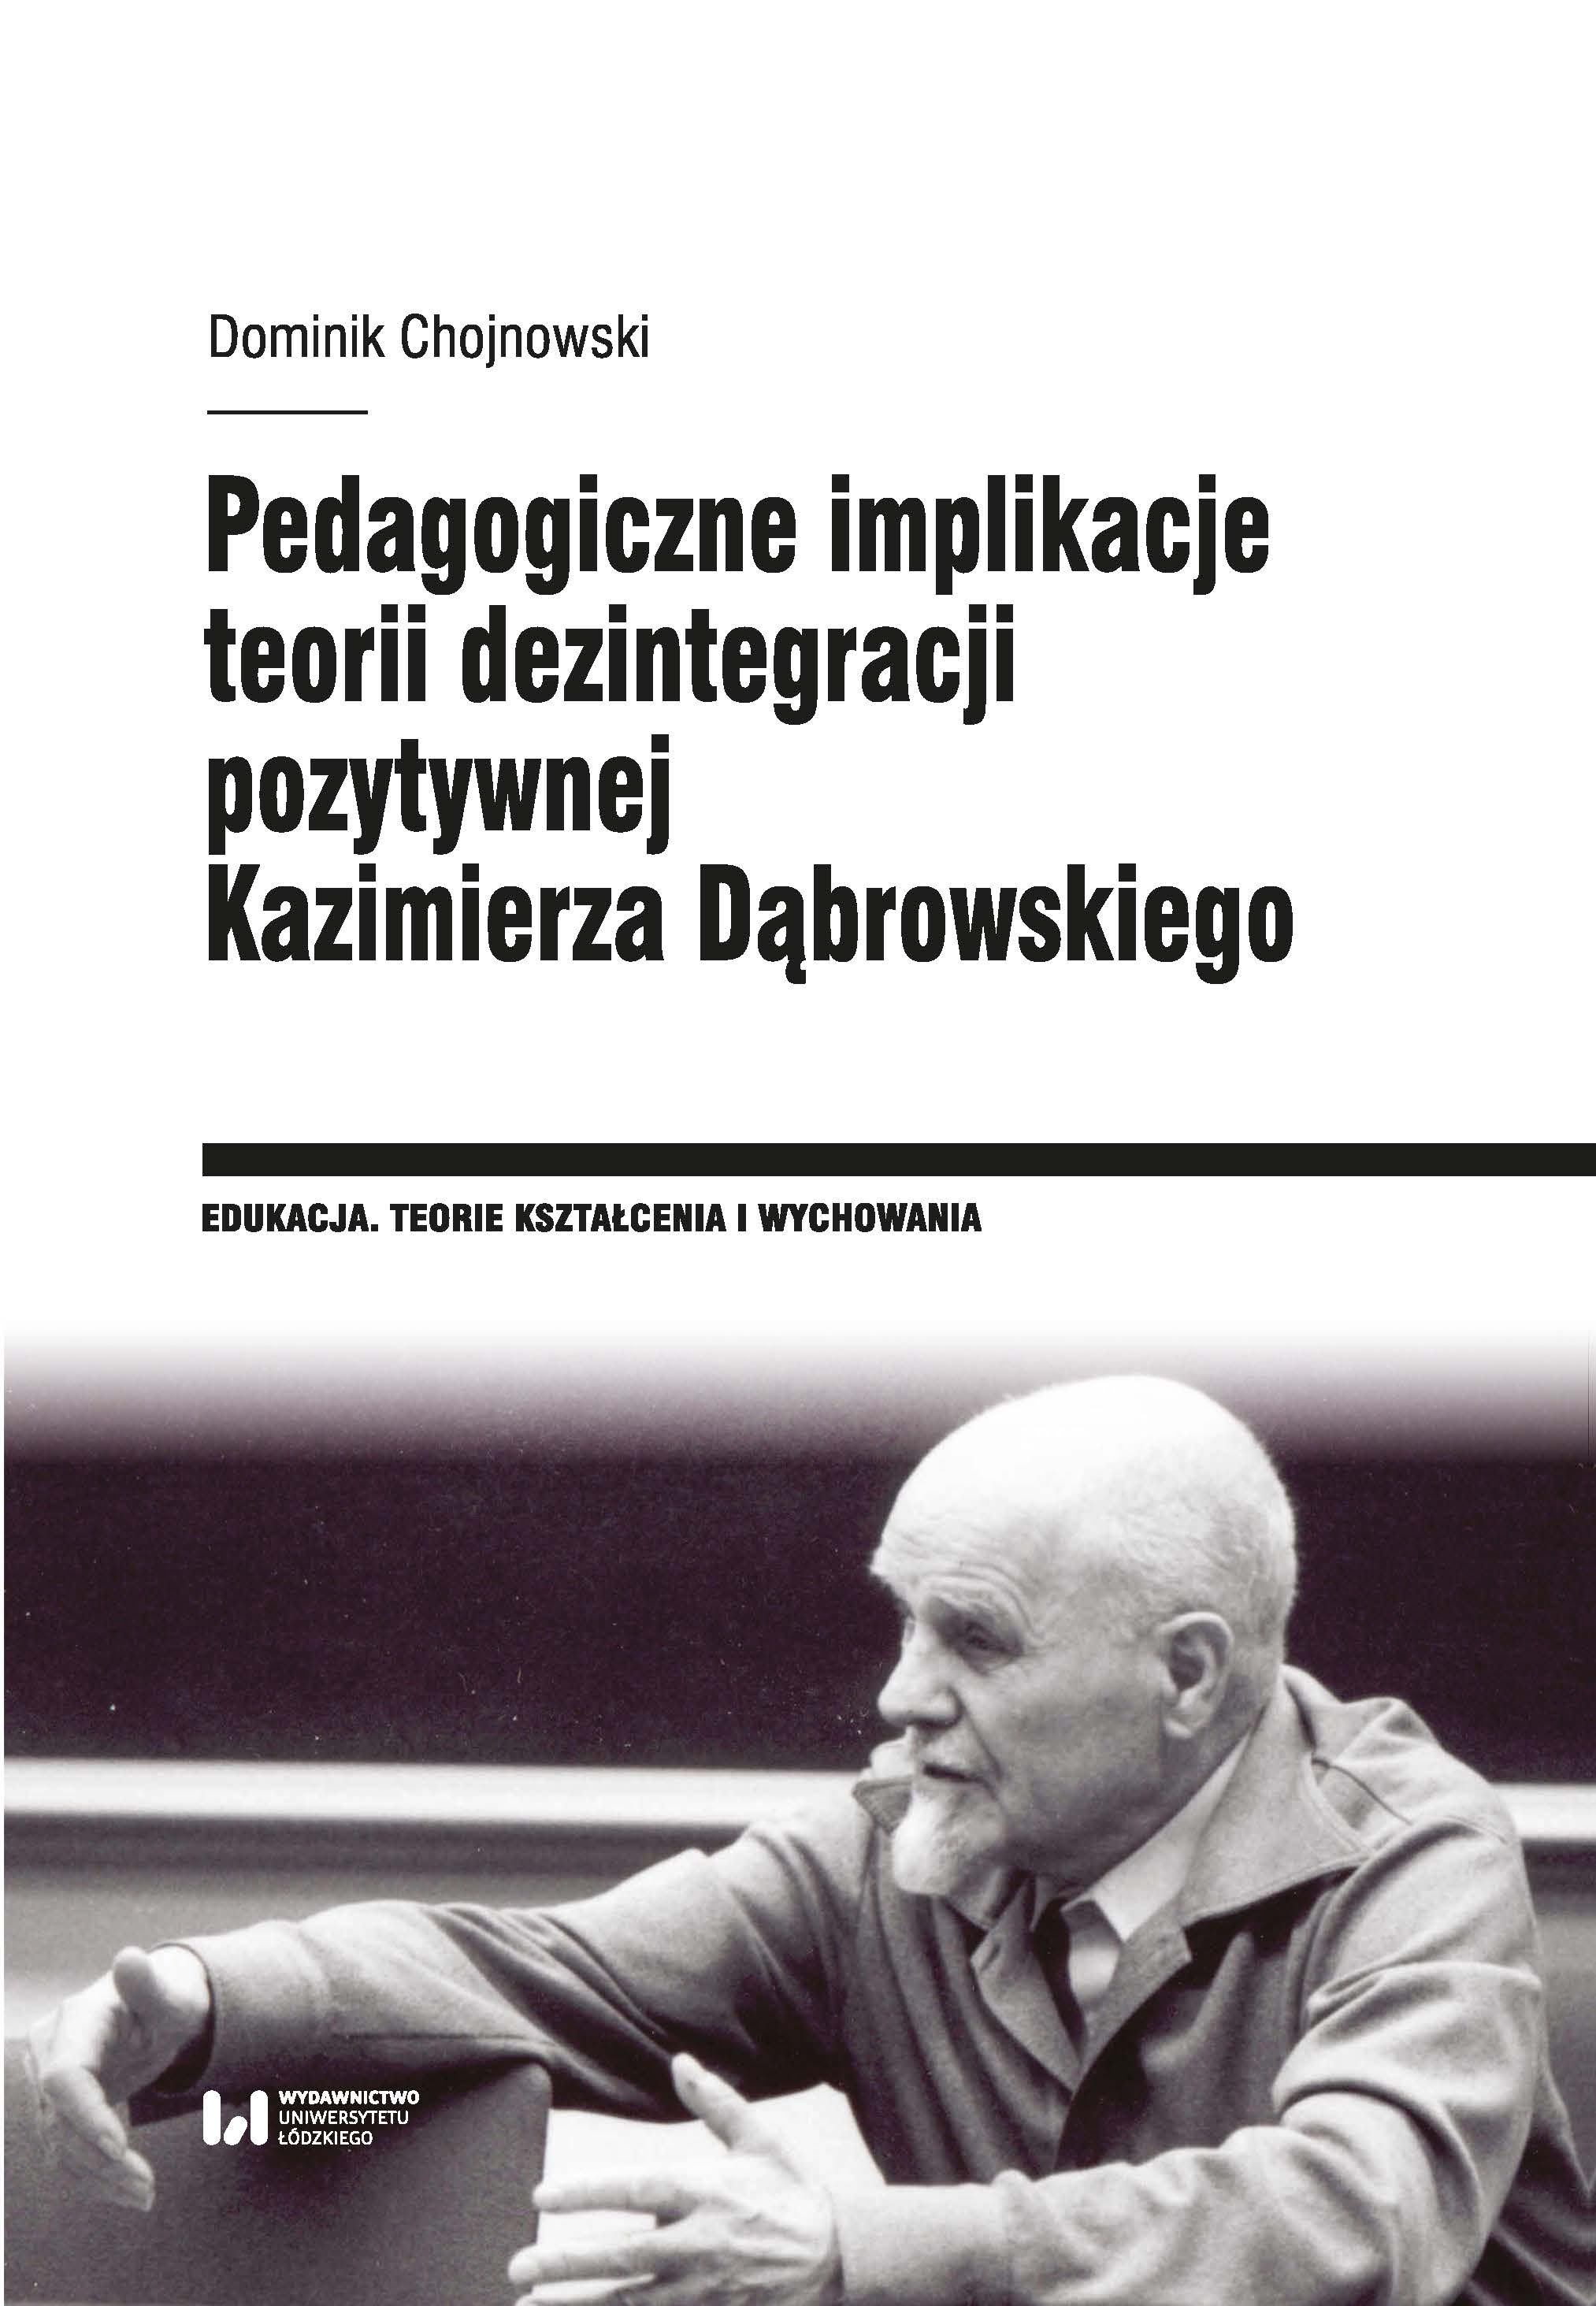 Pedagogical implications of Kazimierz Dąbrowski’s theory of positive disintegration